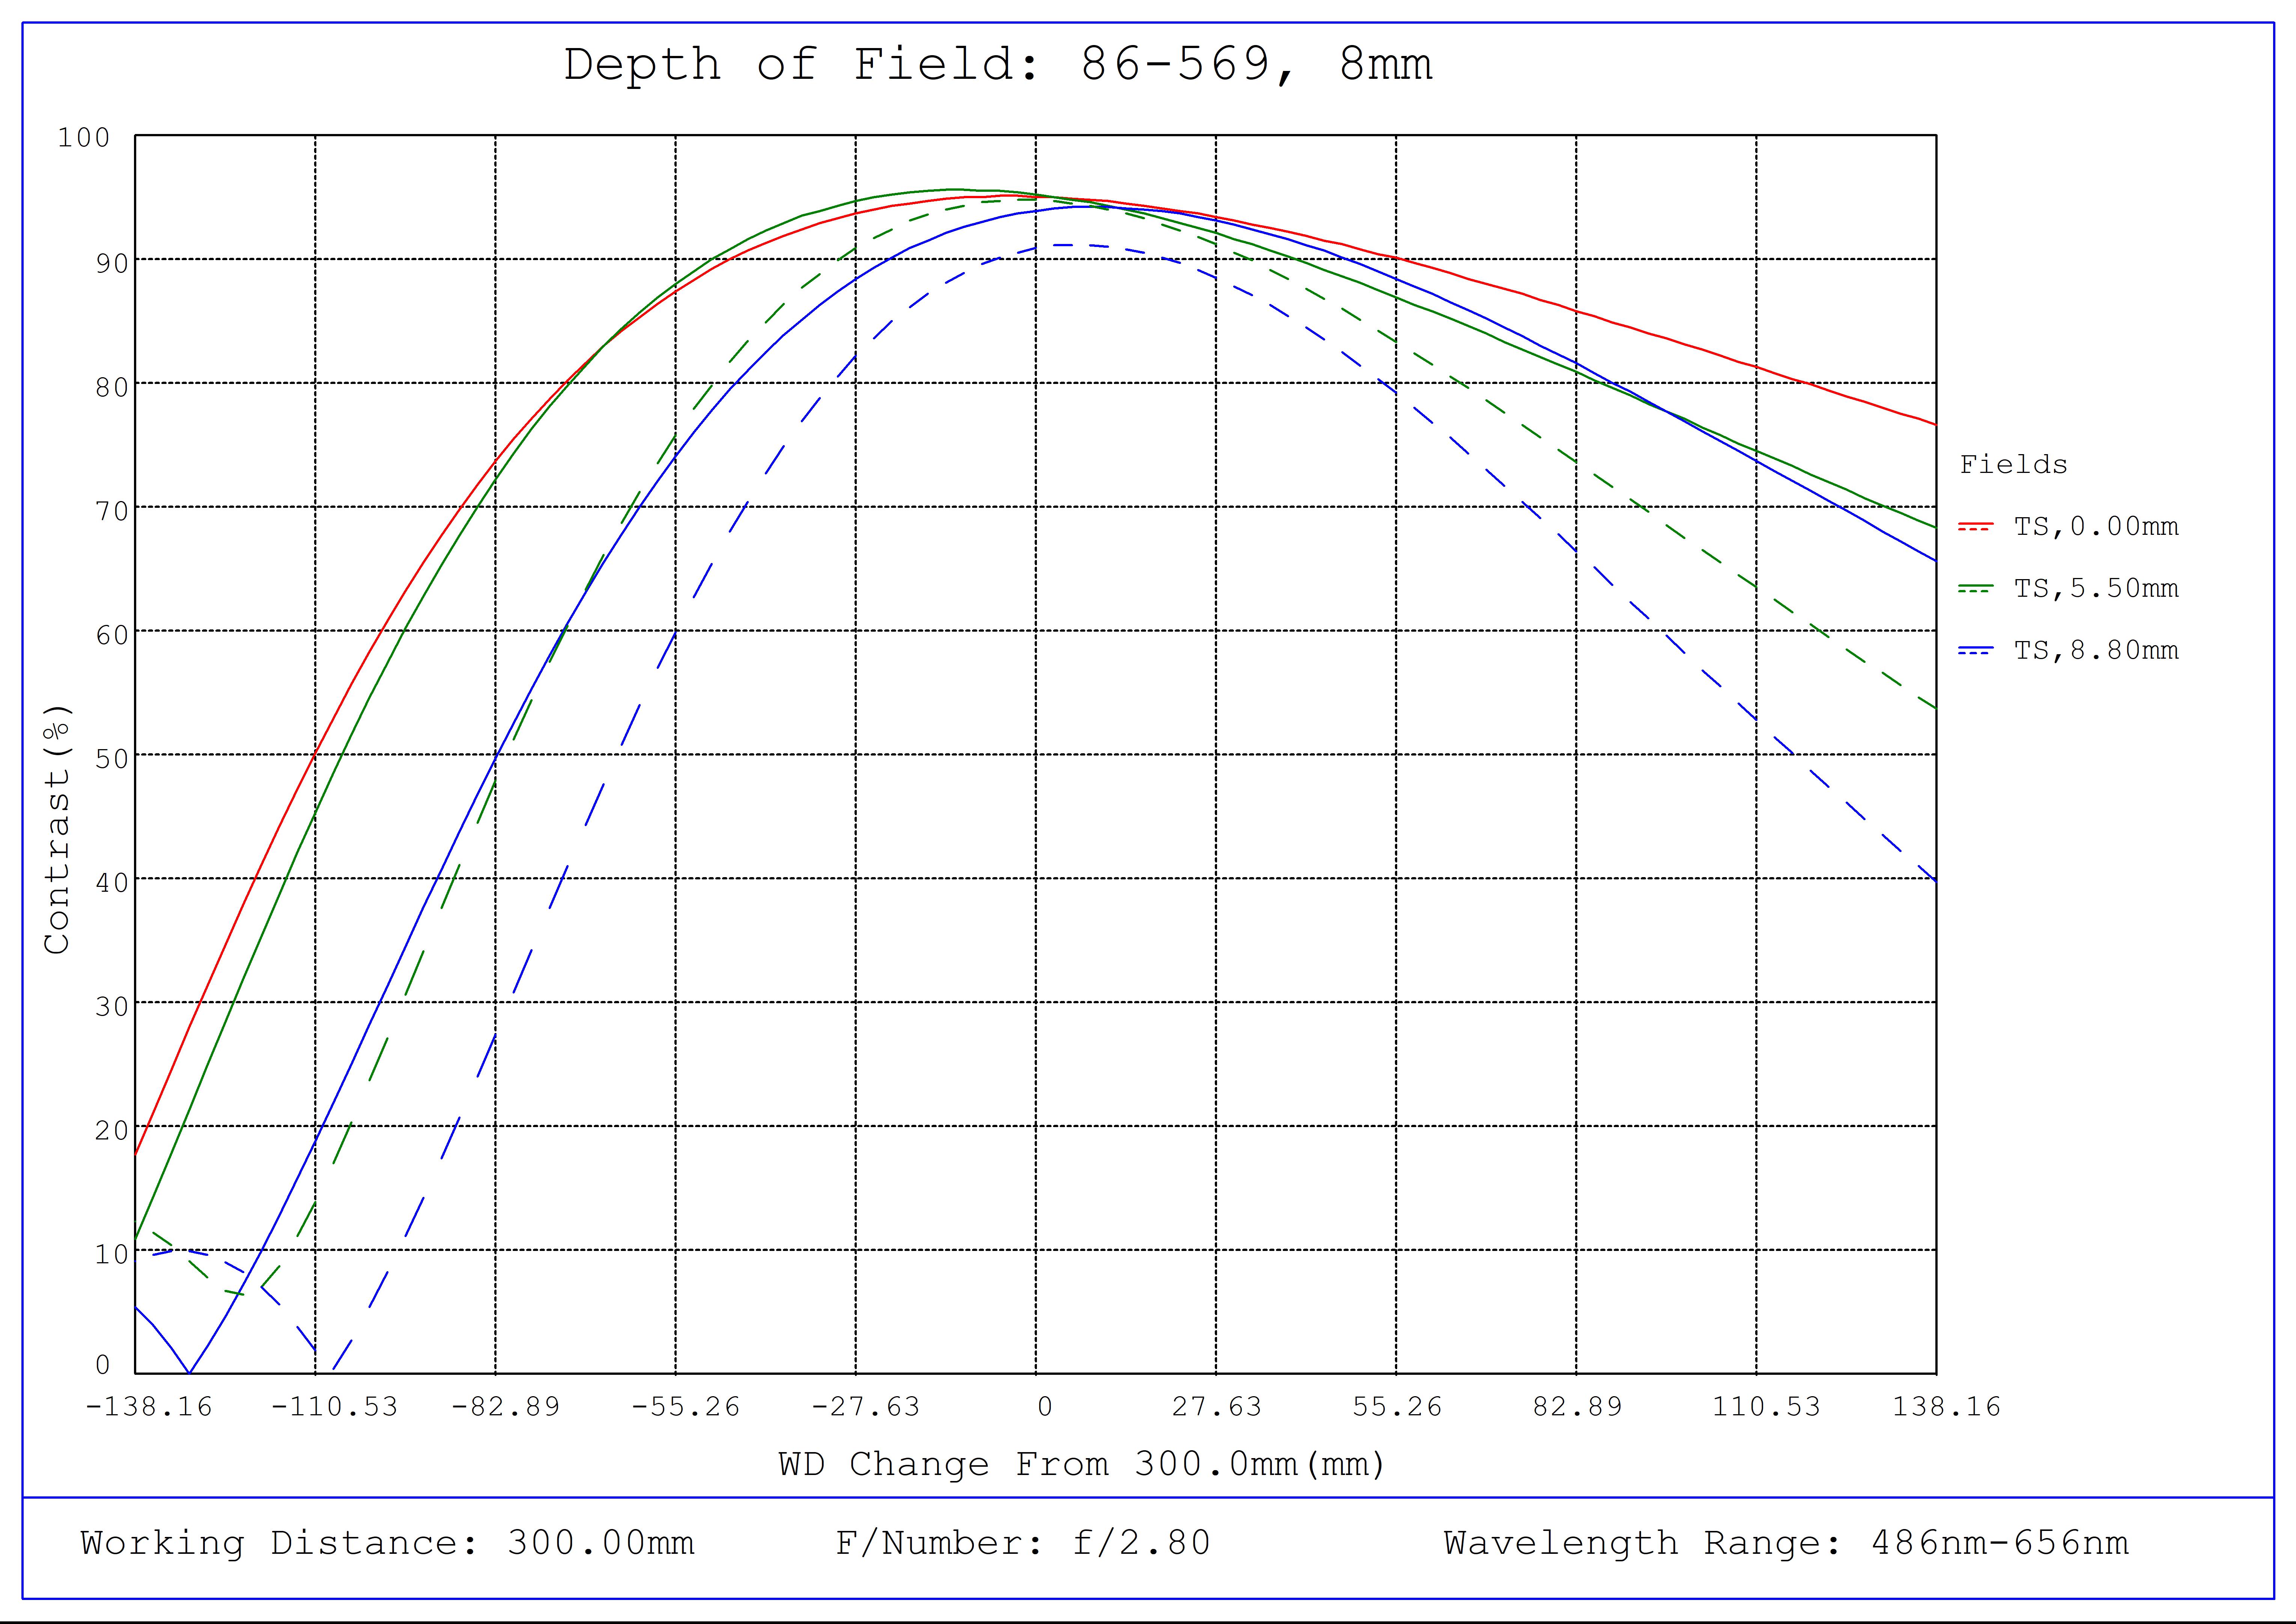 #86-569, 8mm Focal Length, HP Series Fixed Focal Length Lens, Depth of Field Plot, 300mm Working Distance, f2.8